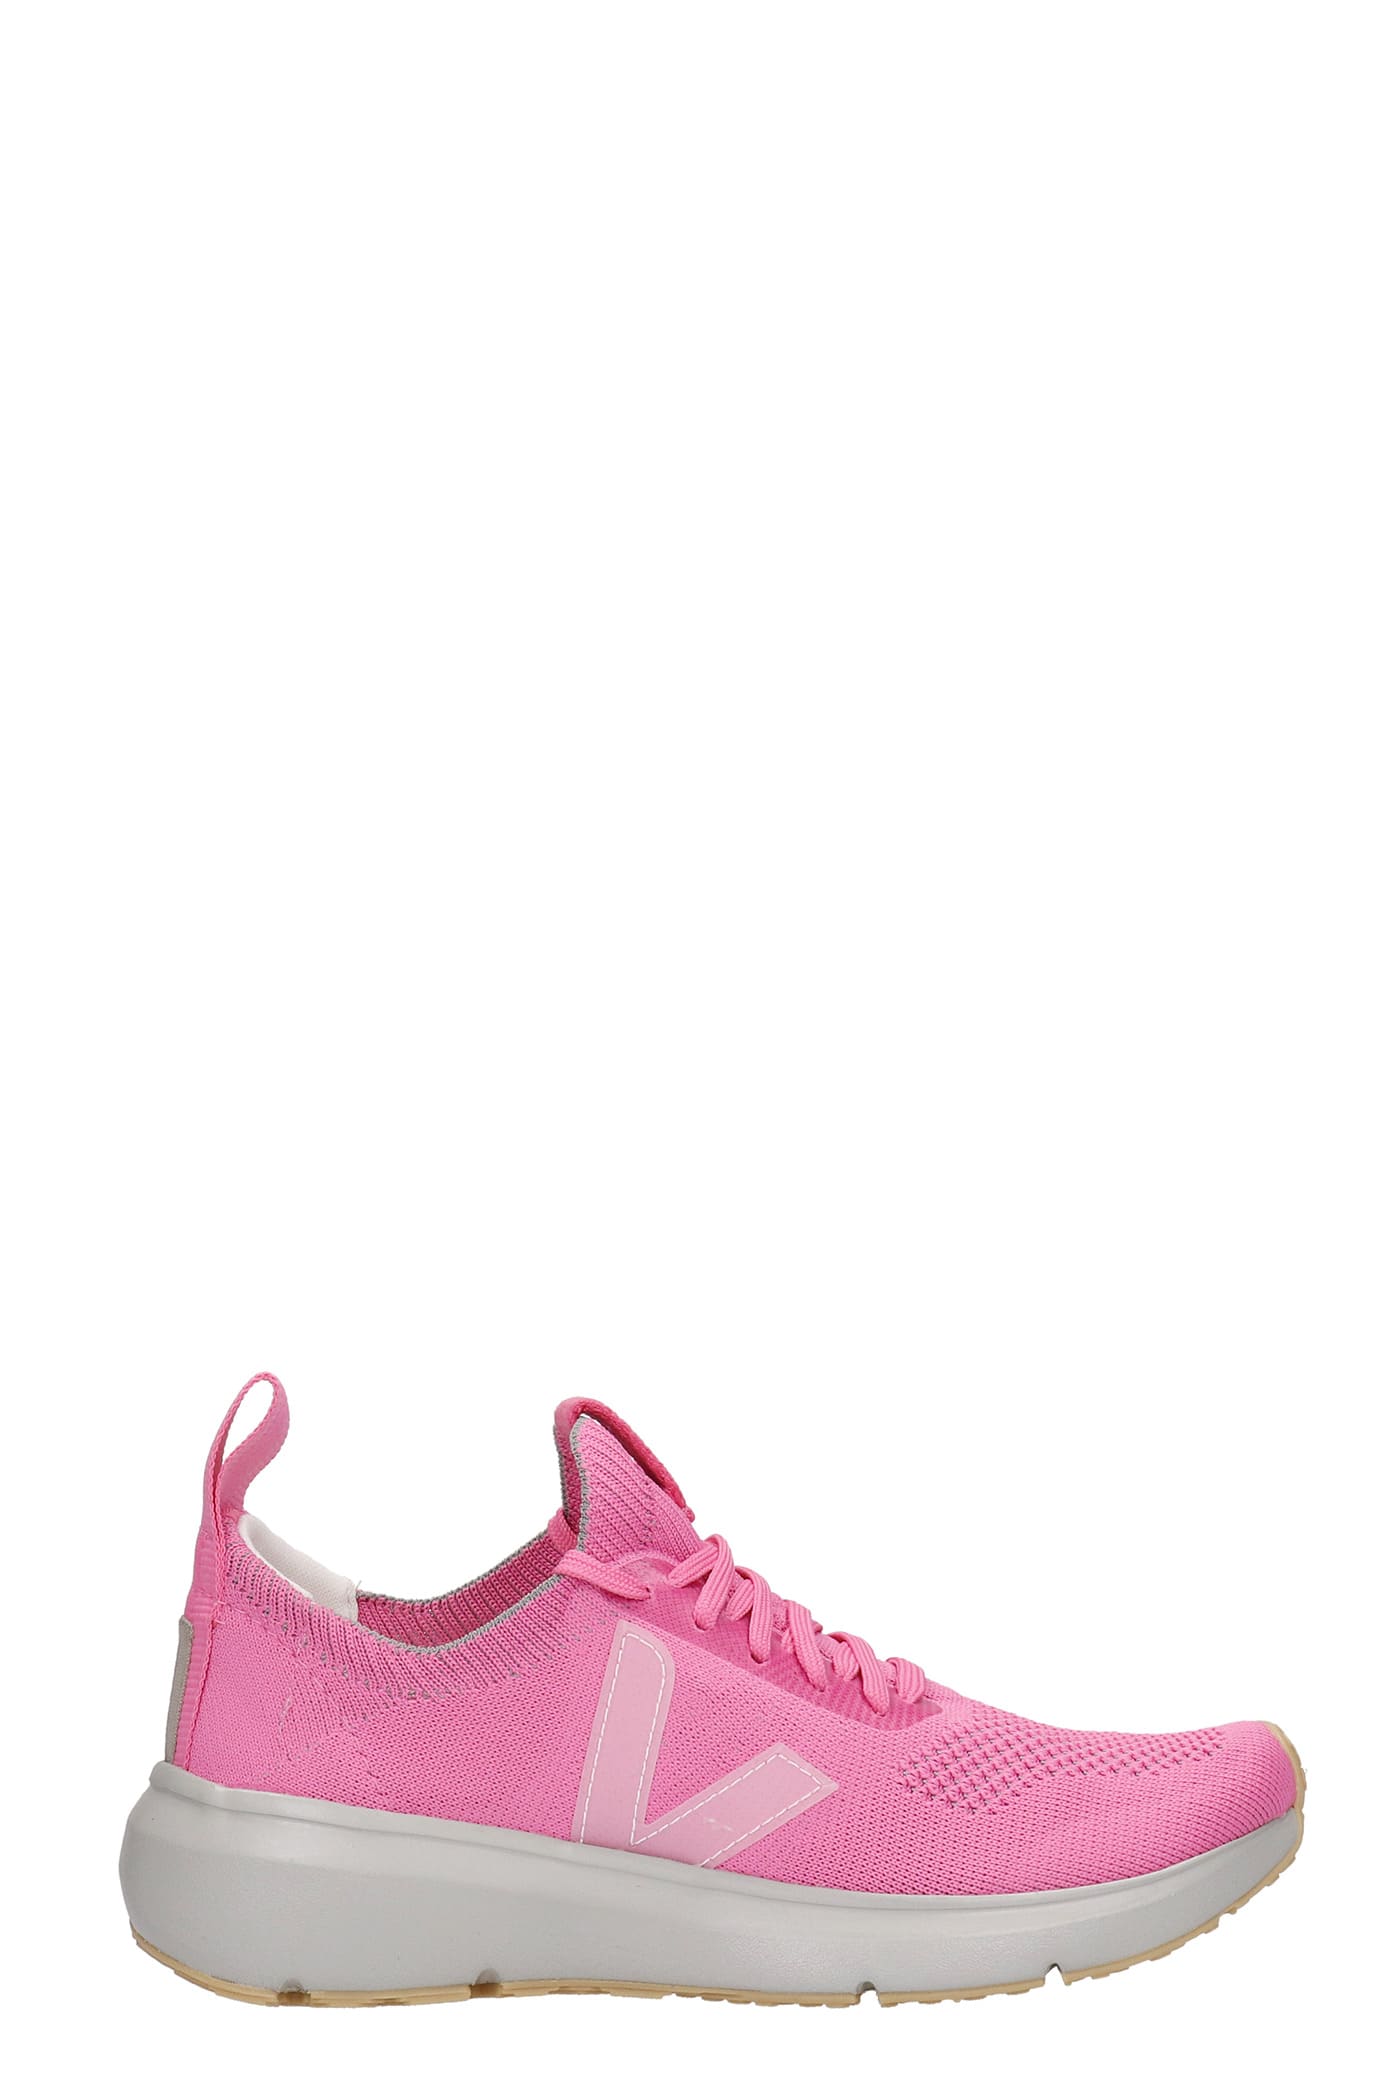 Veja Sneakers In Rose-pink Synthetic Fibers